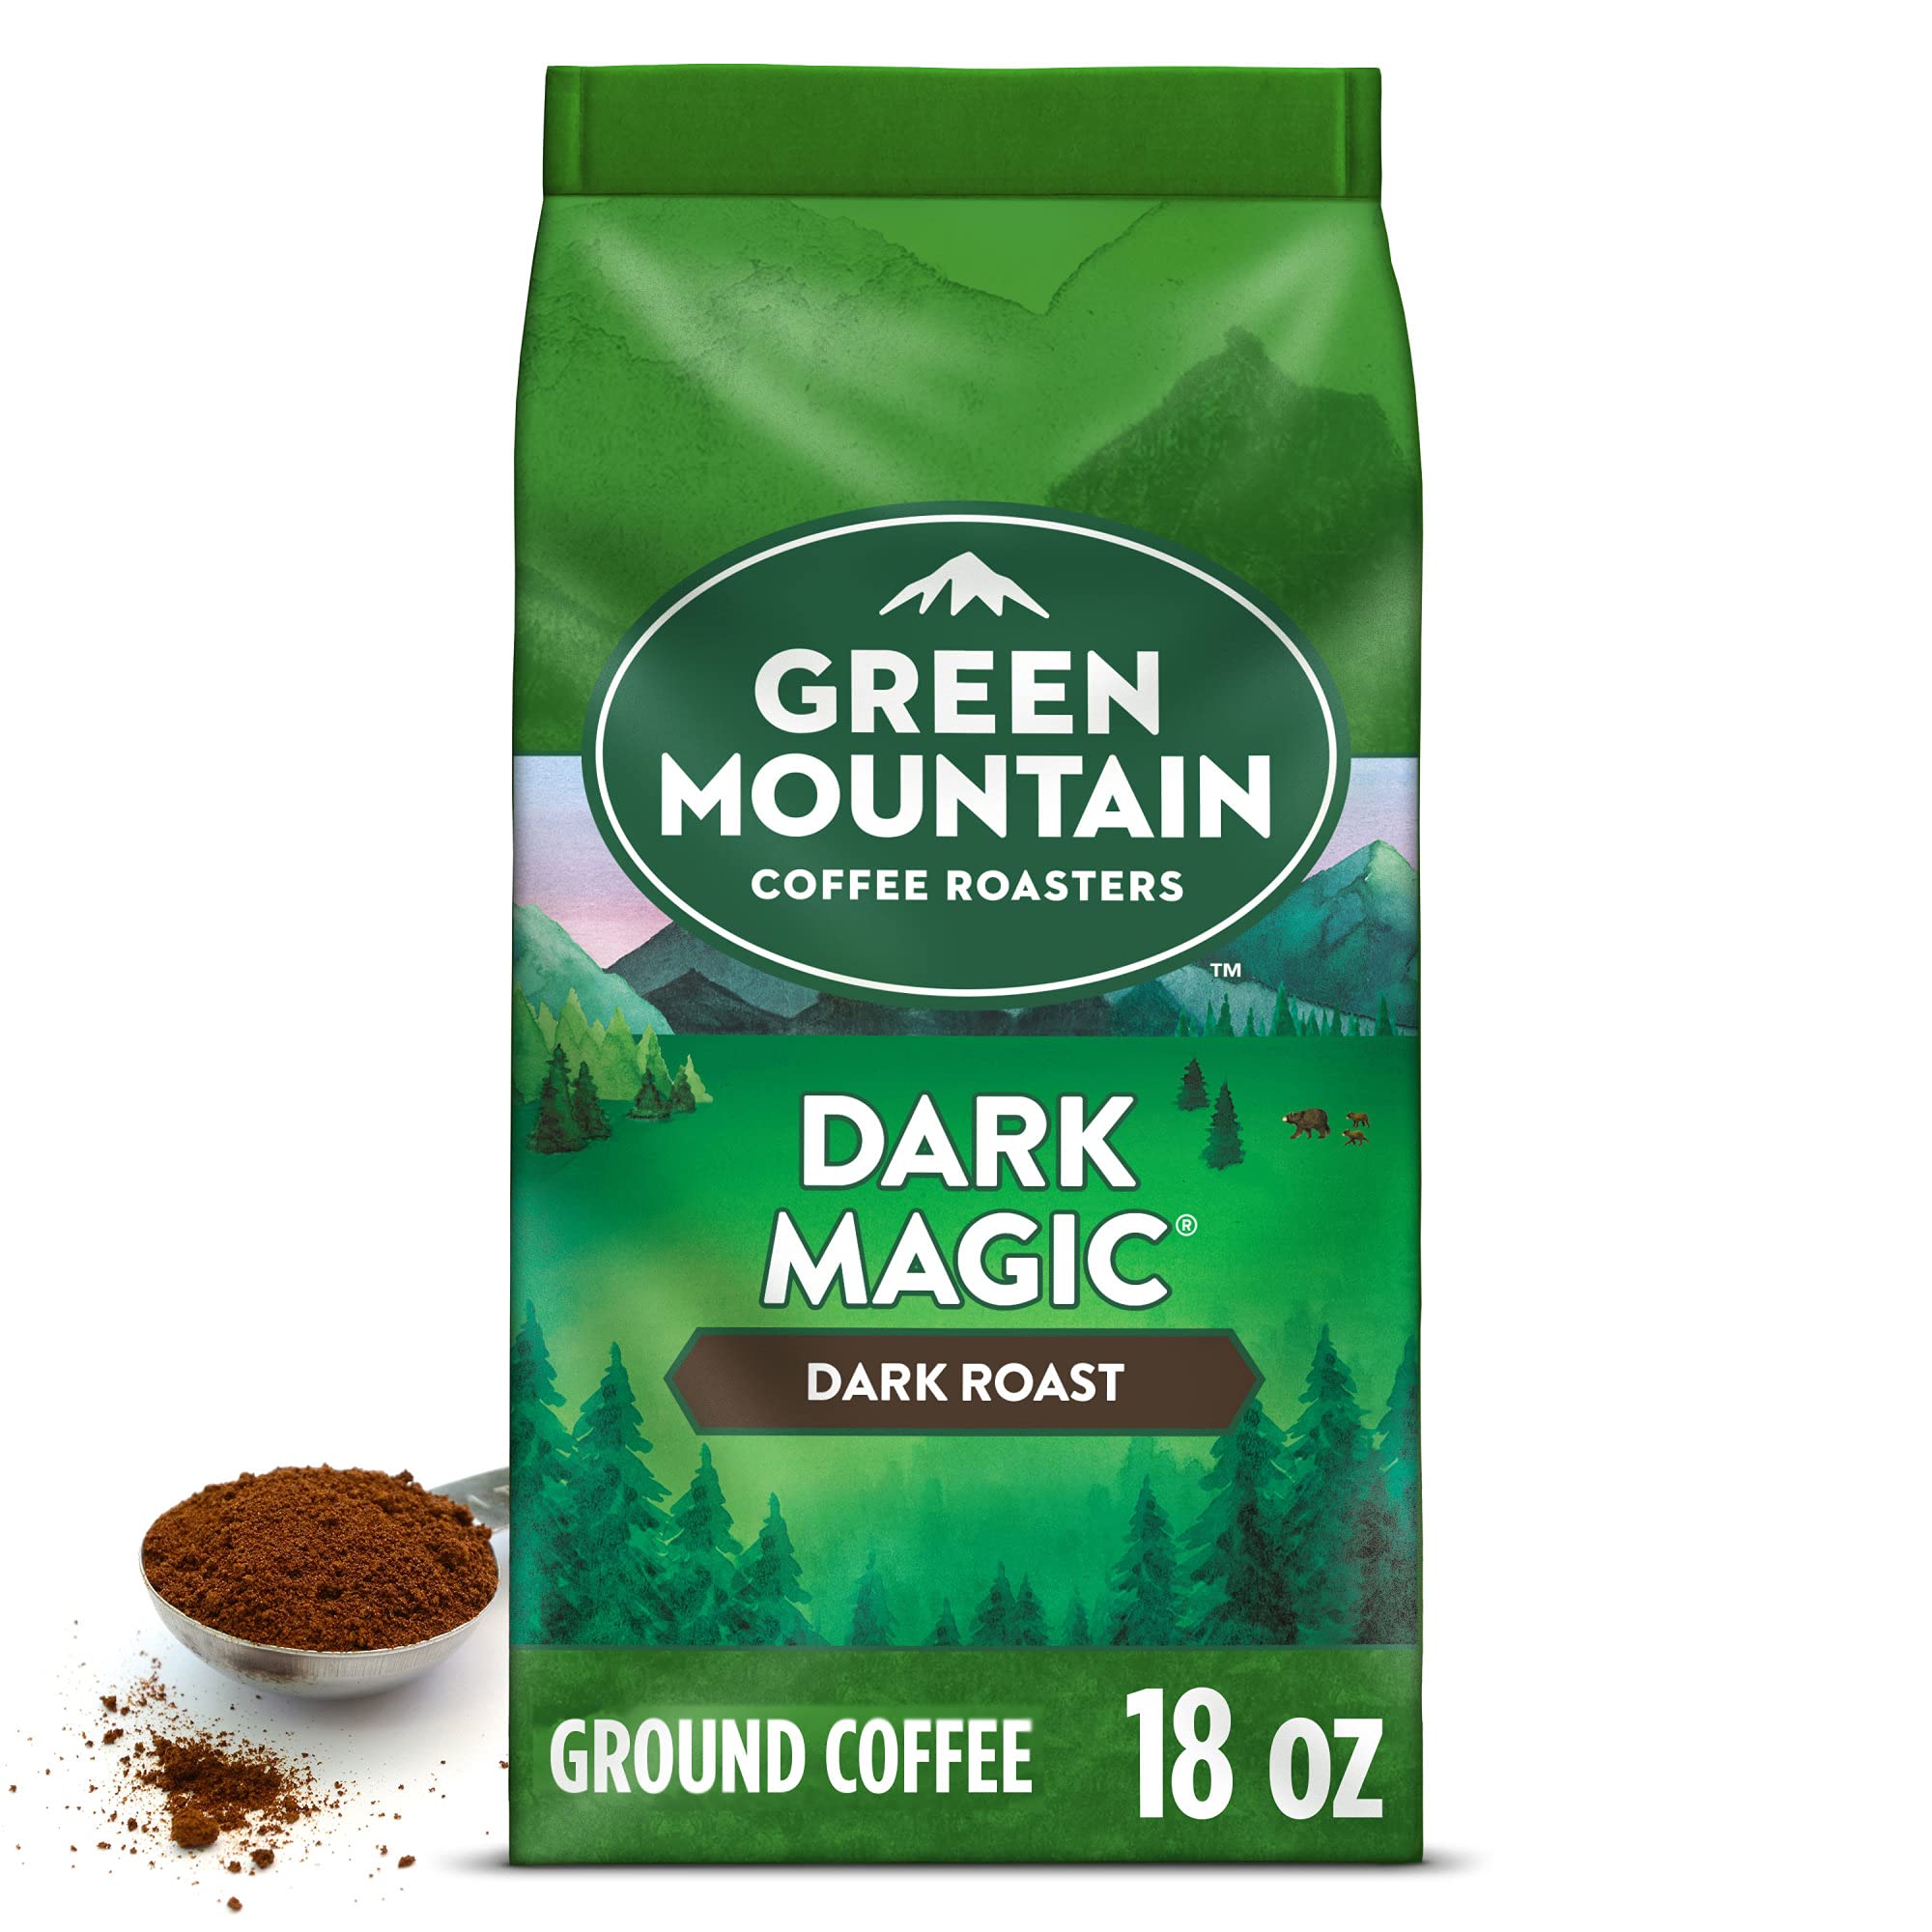 amazon $6.50 for 18oz bag Green Mountain Coffee Roasters Dark Magic, 18 oz - $6.50